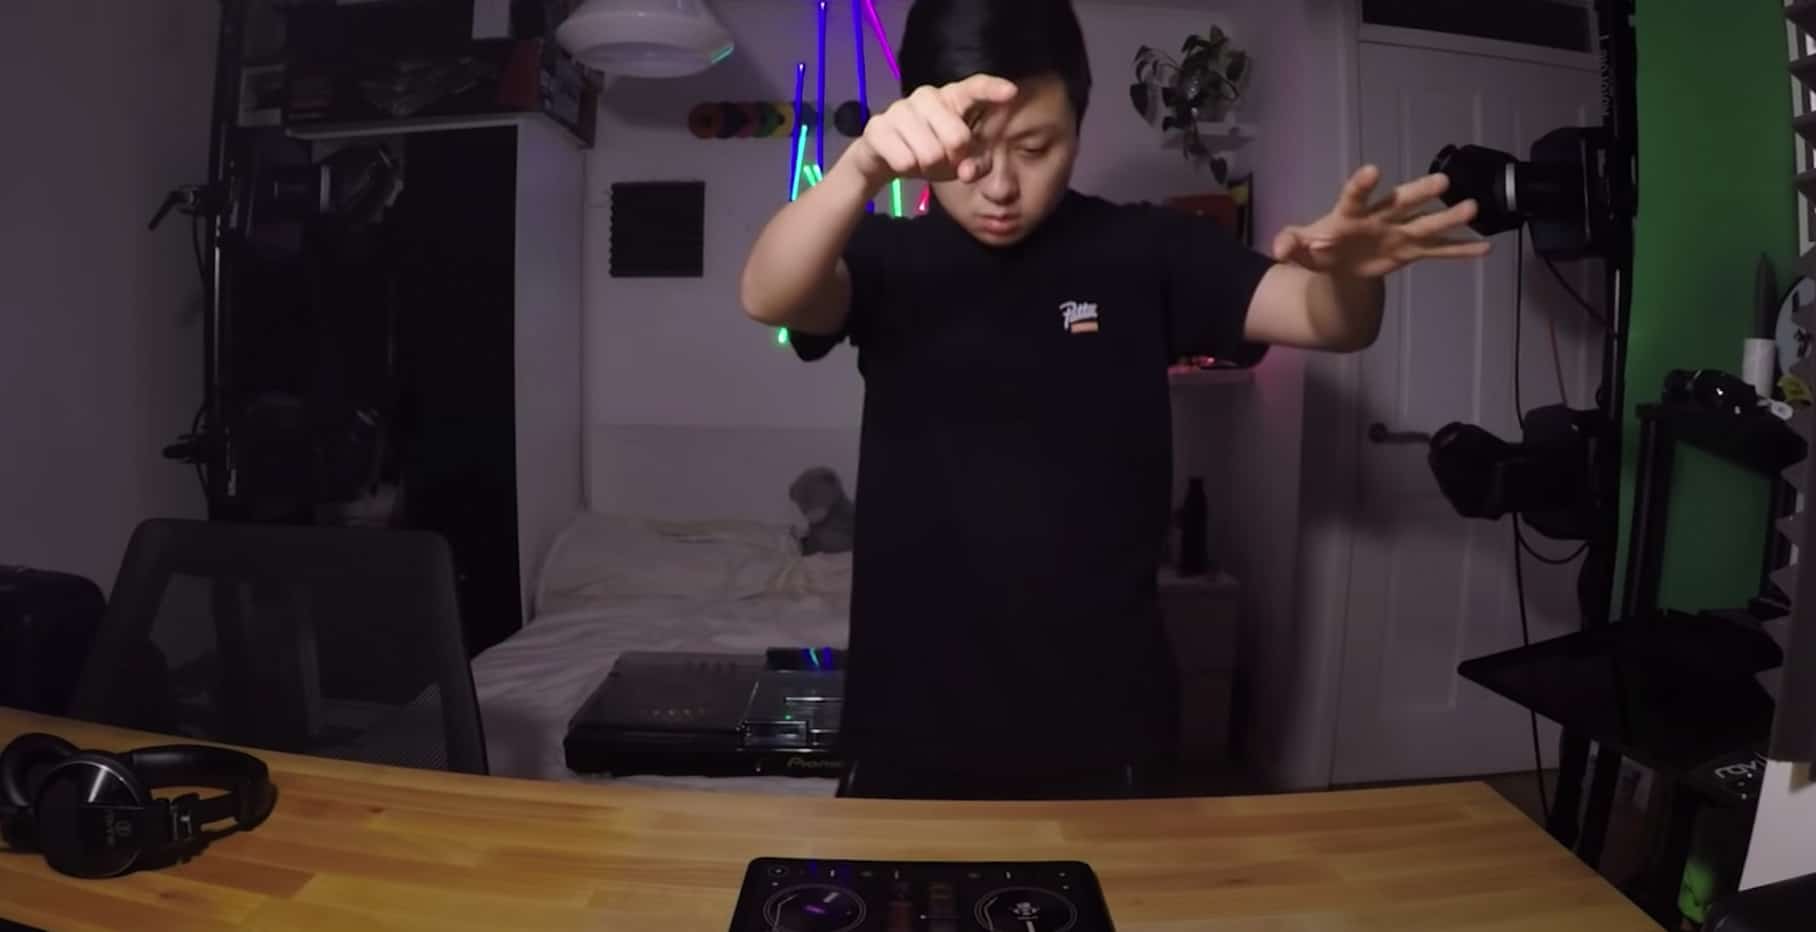 djay agregó Gesture Control: ¡usa tus manos para controlar la mezcla! 5